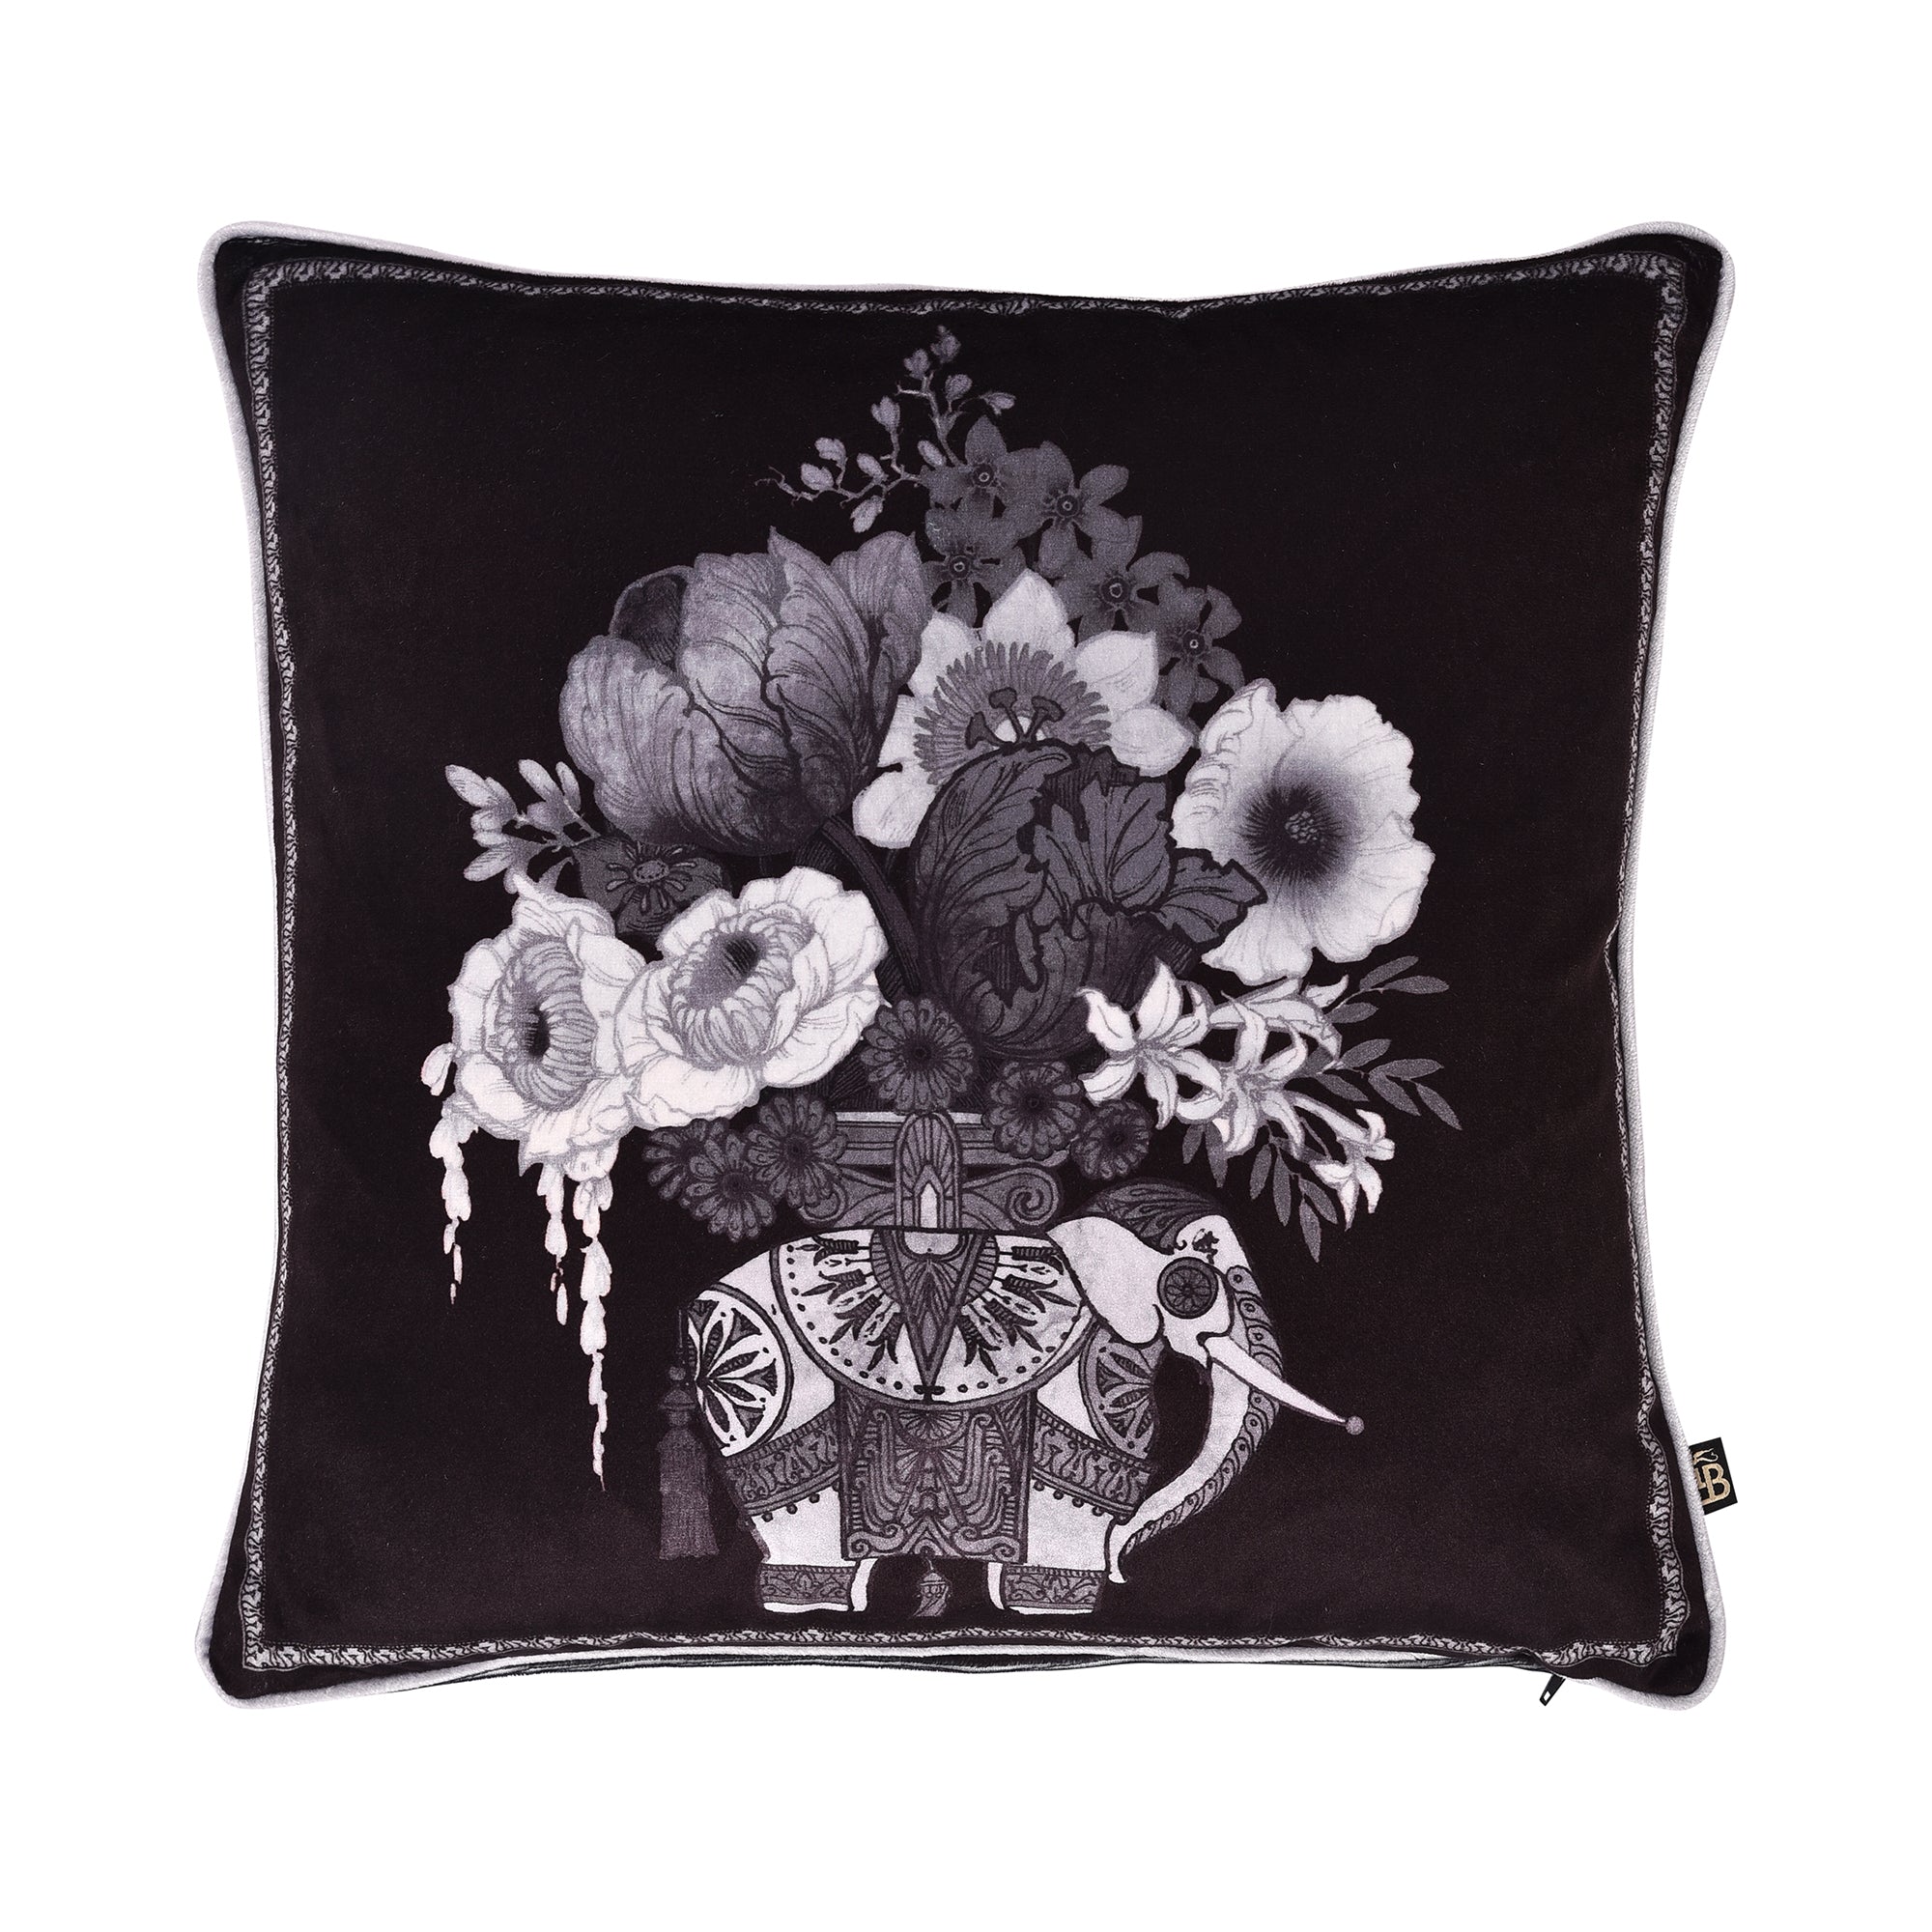 Filled Cushion Generou Elephant by Laurence Llewelyn-Bowen in Black/White